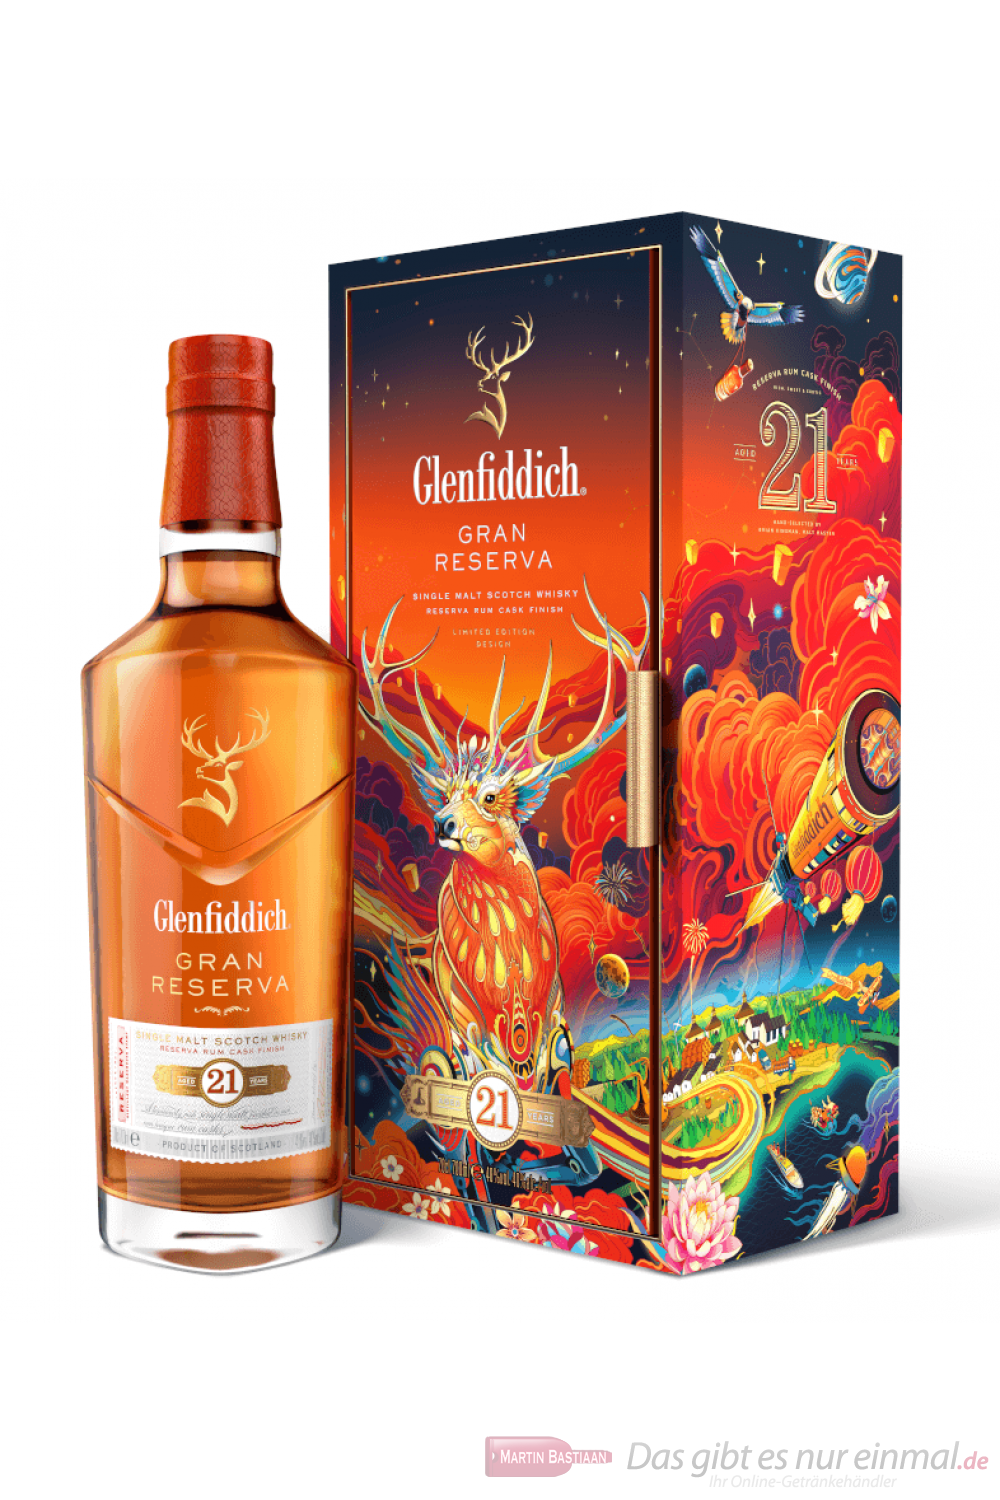 Glenfiddich 21 years Chinese New Year Single Malt Scotch Whisky 0,7l